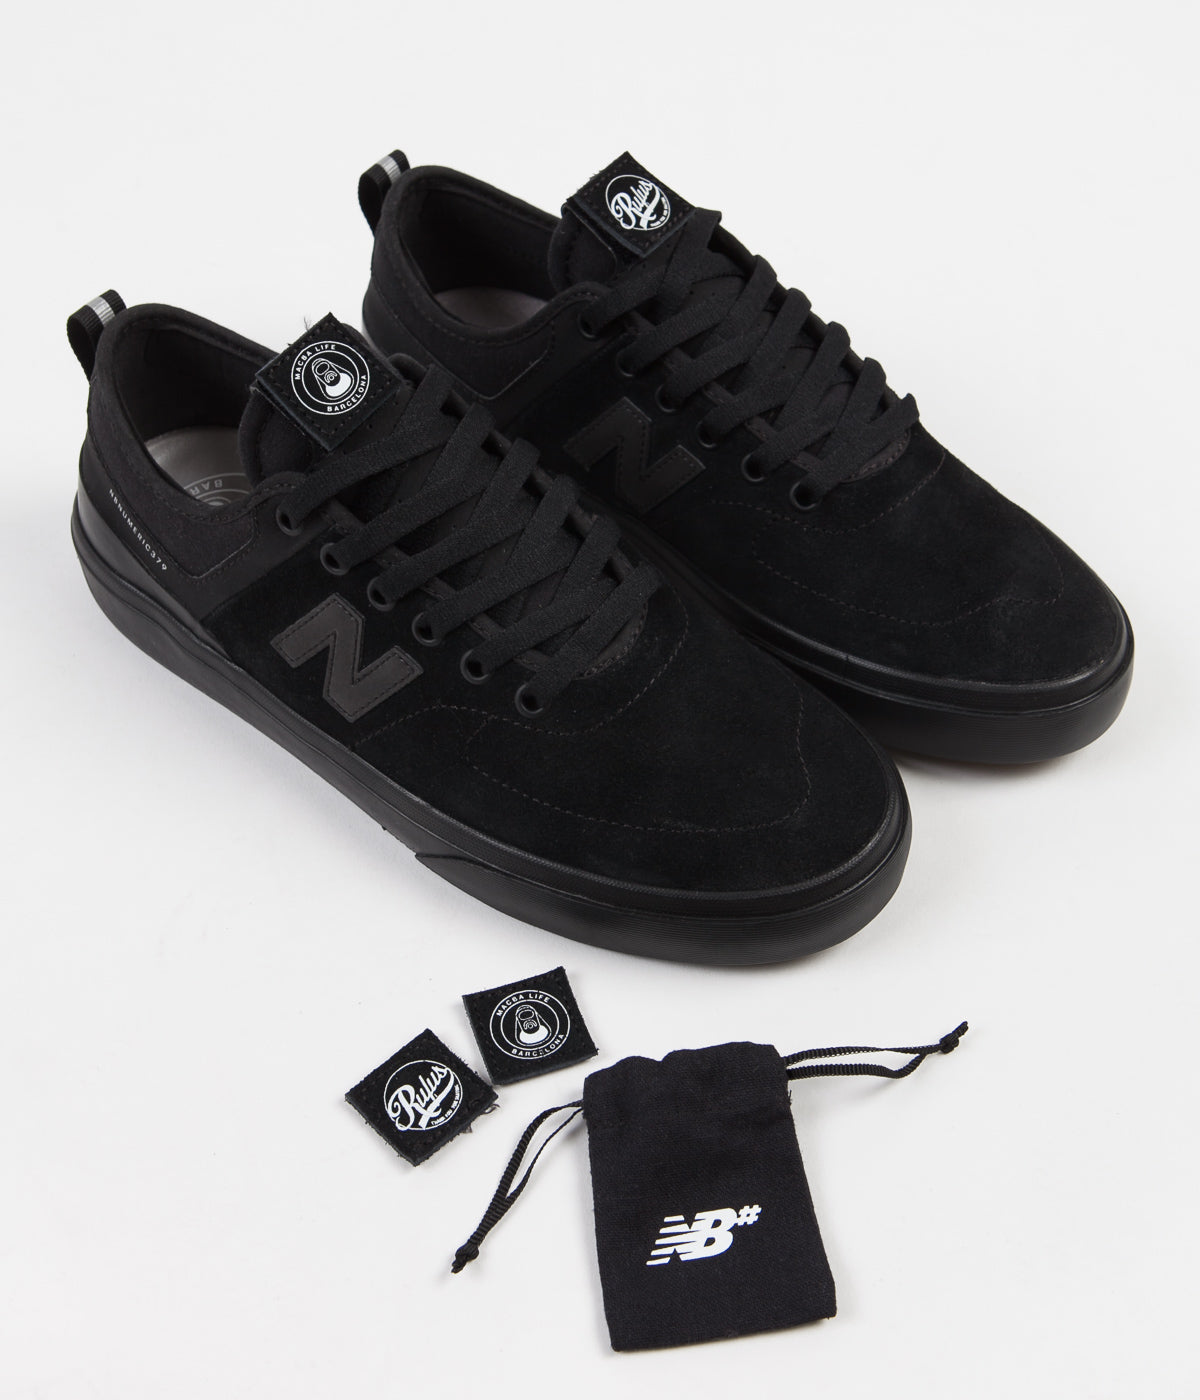 new balance black skate shoes